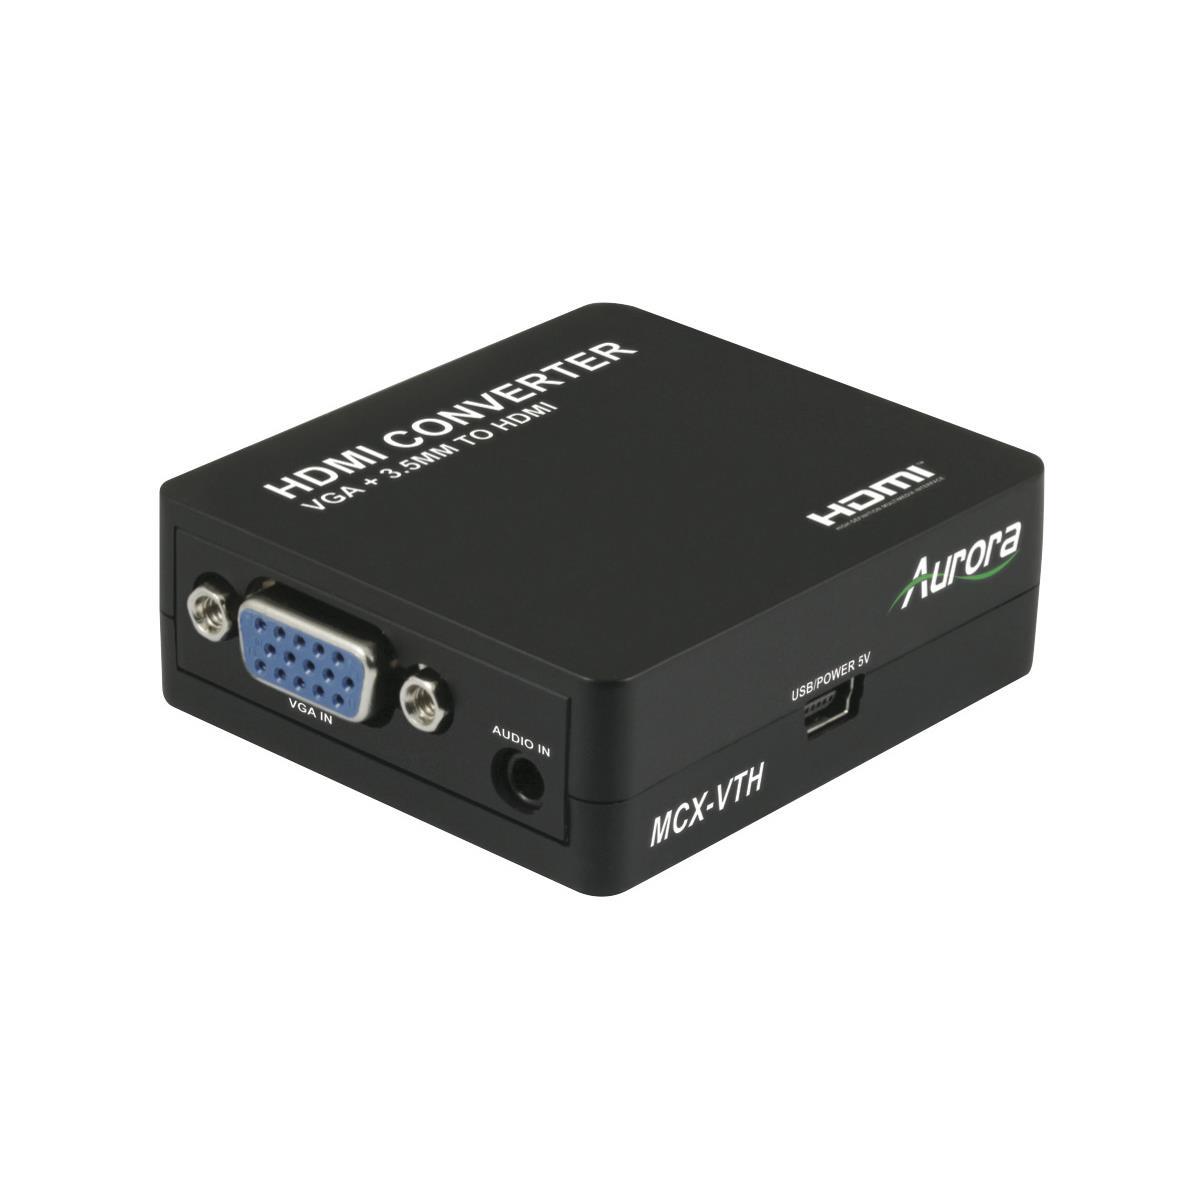 Image of Aurora Multimedia MCX-VTH VGA to HDMI Converter